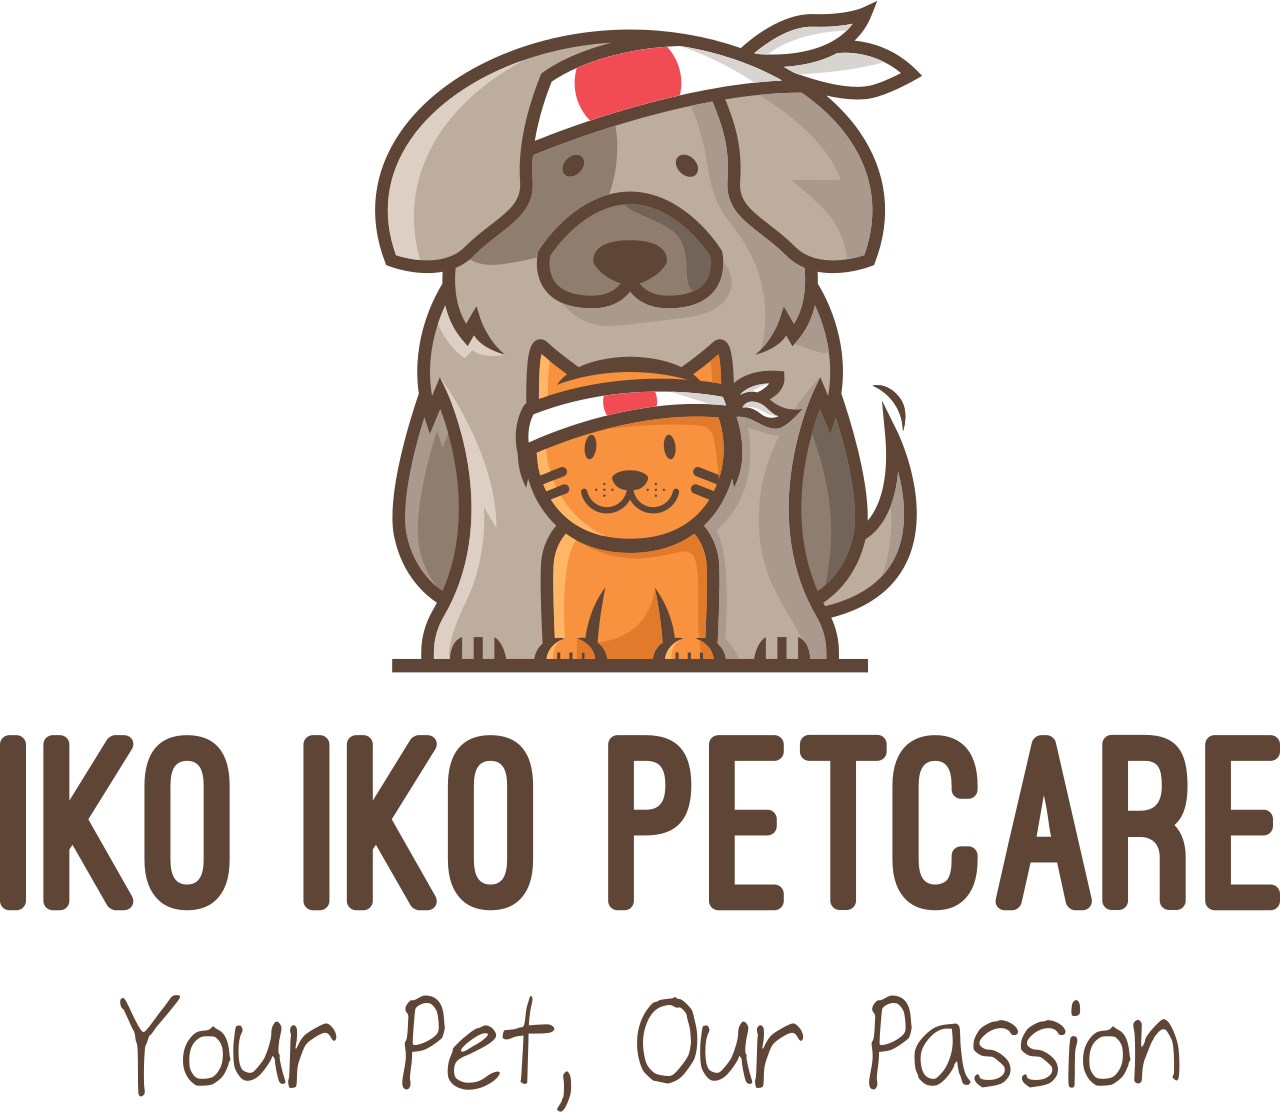 IKO IKO Petcare's web page